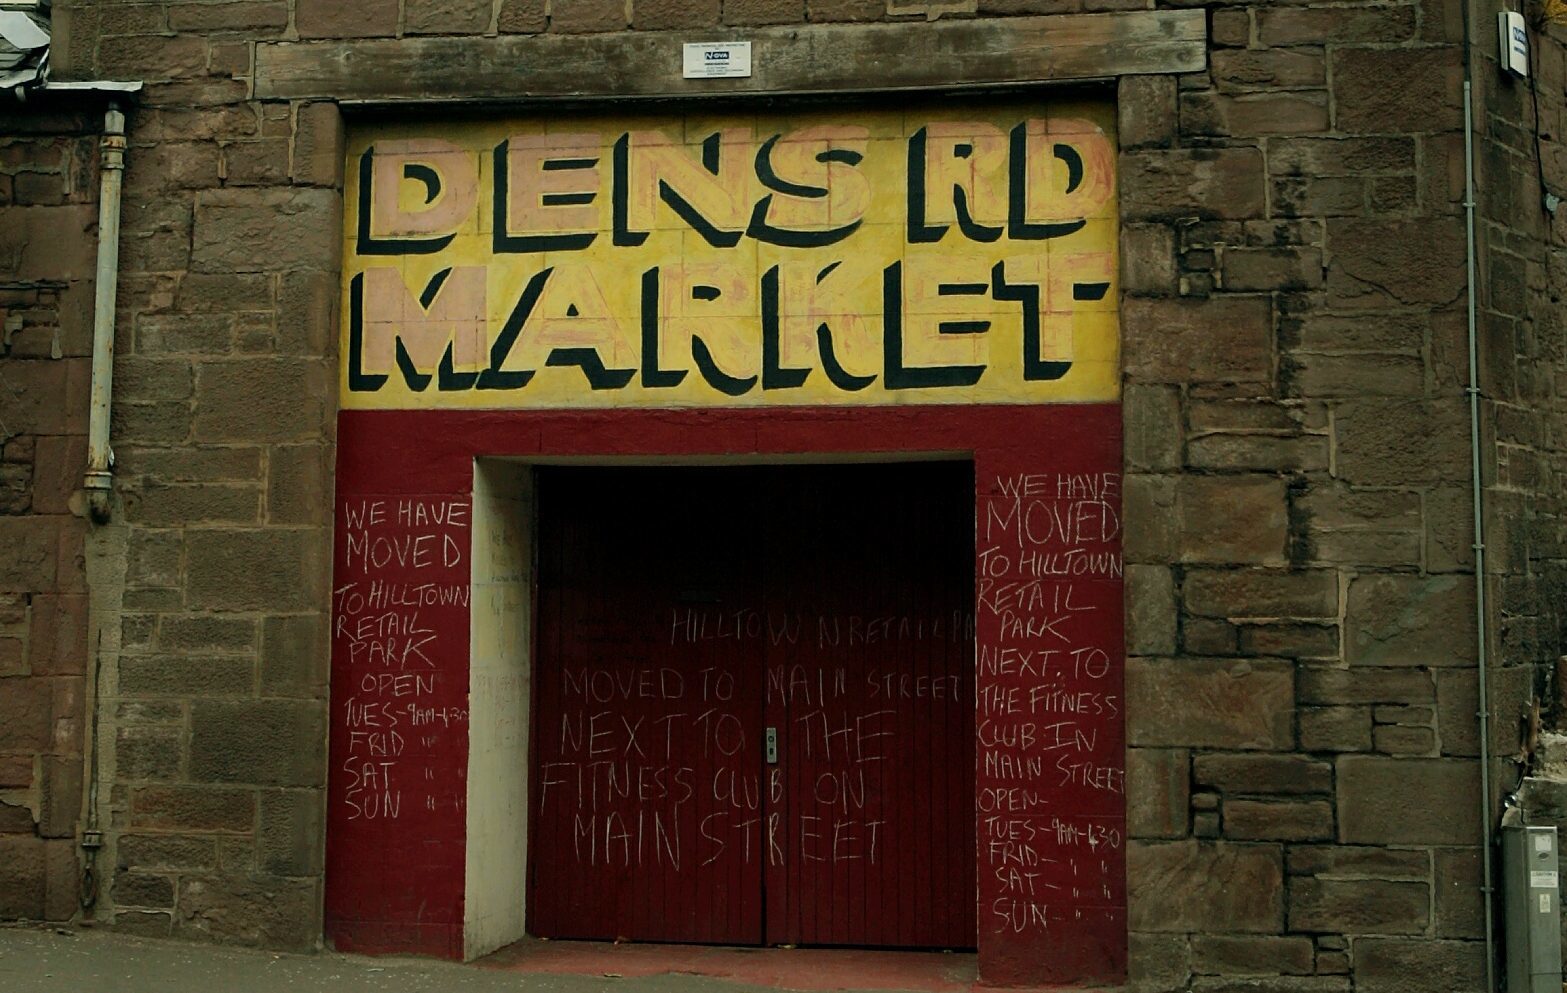 Dens Road Market.